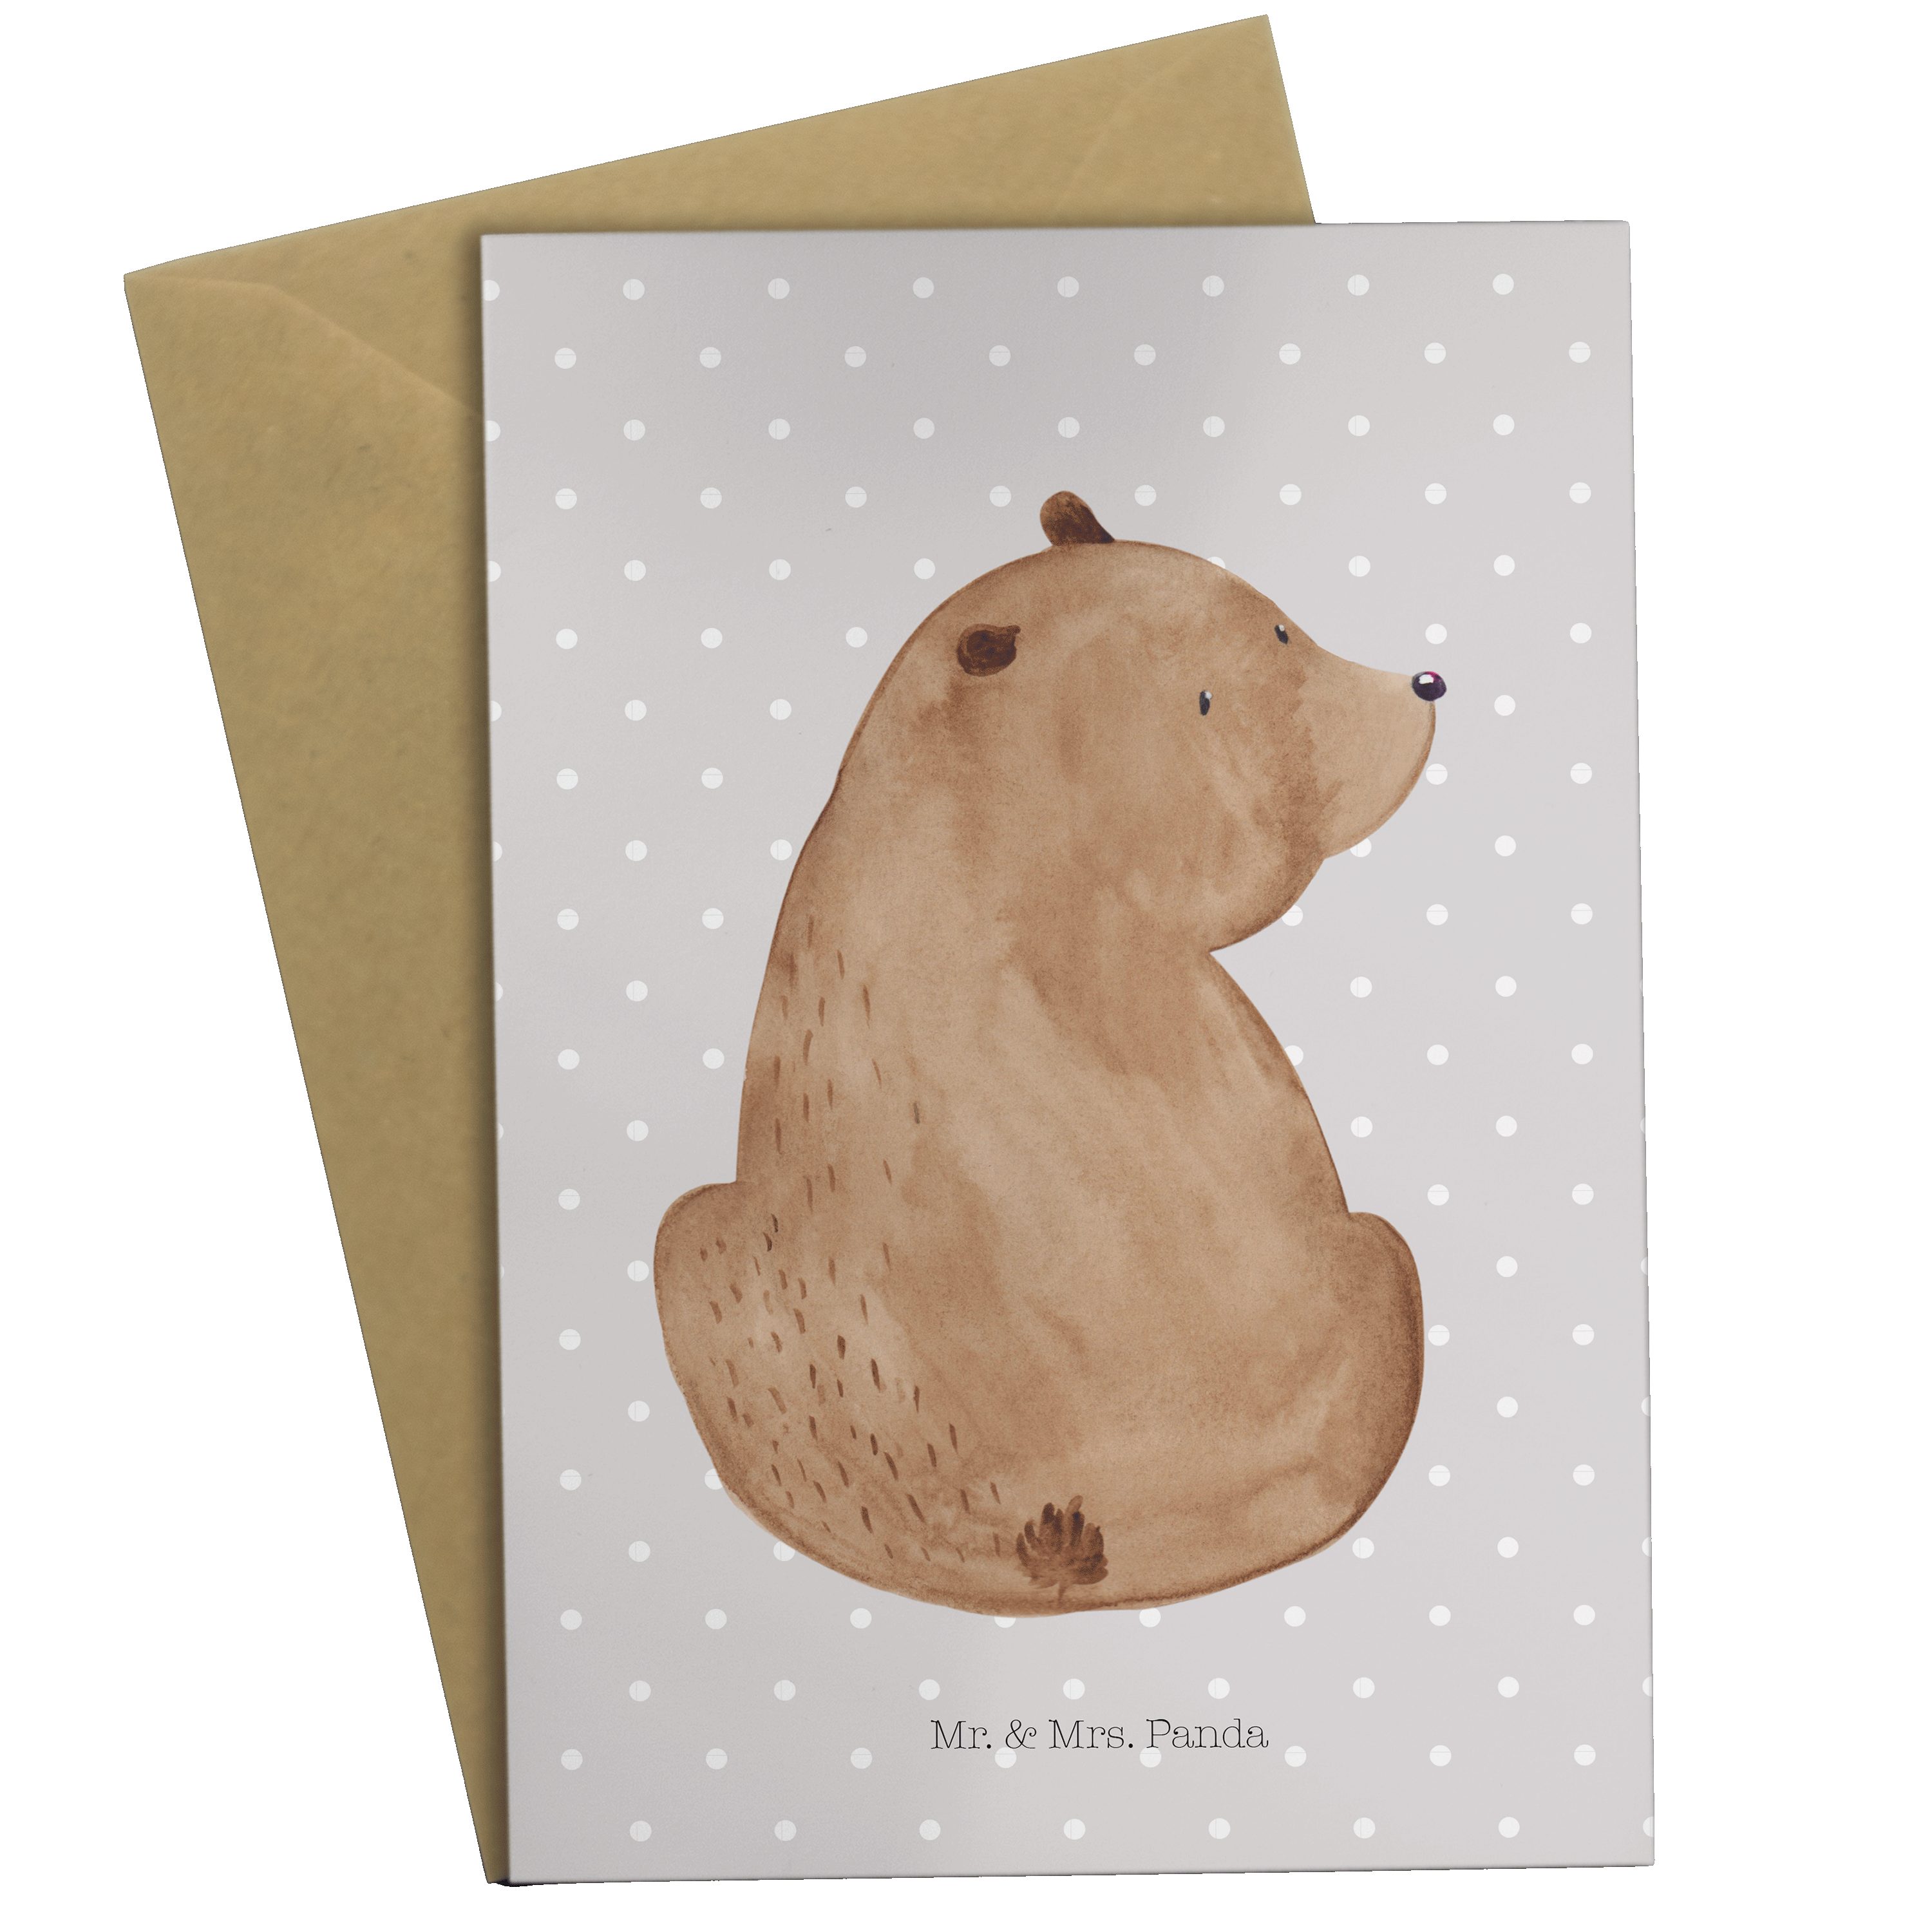 Mr. & Mrs. Panda Weishe Pastell Grußkarte - Grau Schulterblick Geburtstagskarte, - Bär Geschenk